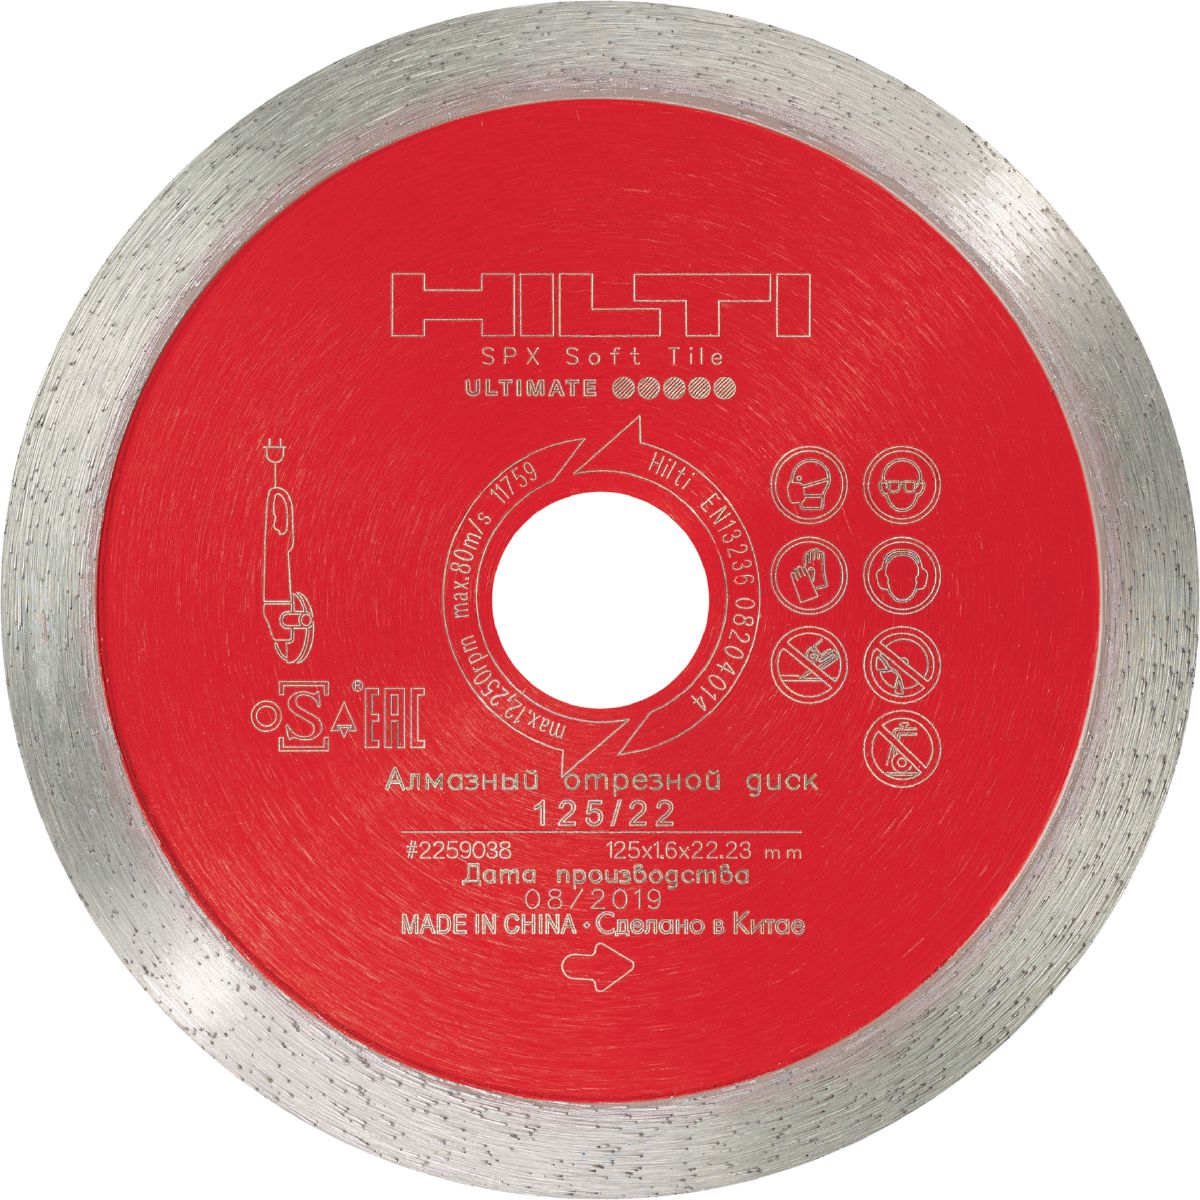 Отрезной диск Хилти (Hilti) DC-D SPX 230 soft tile